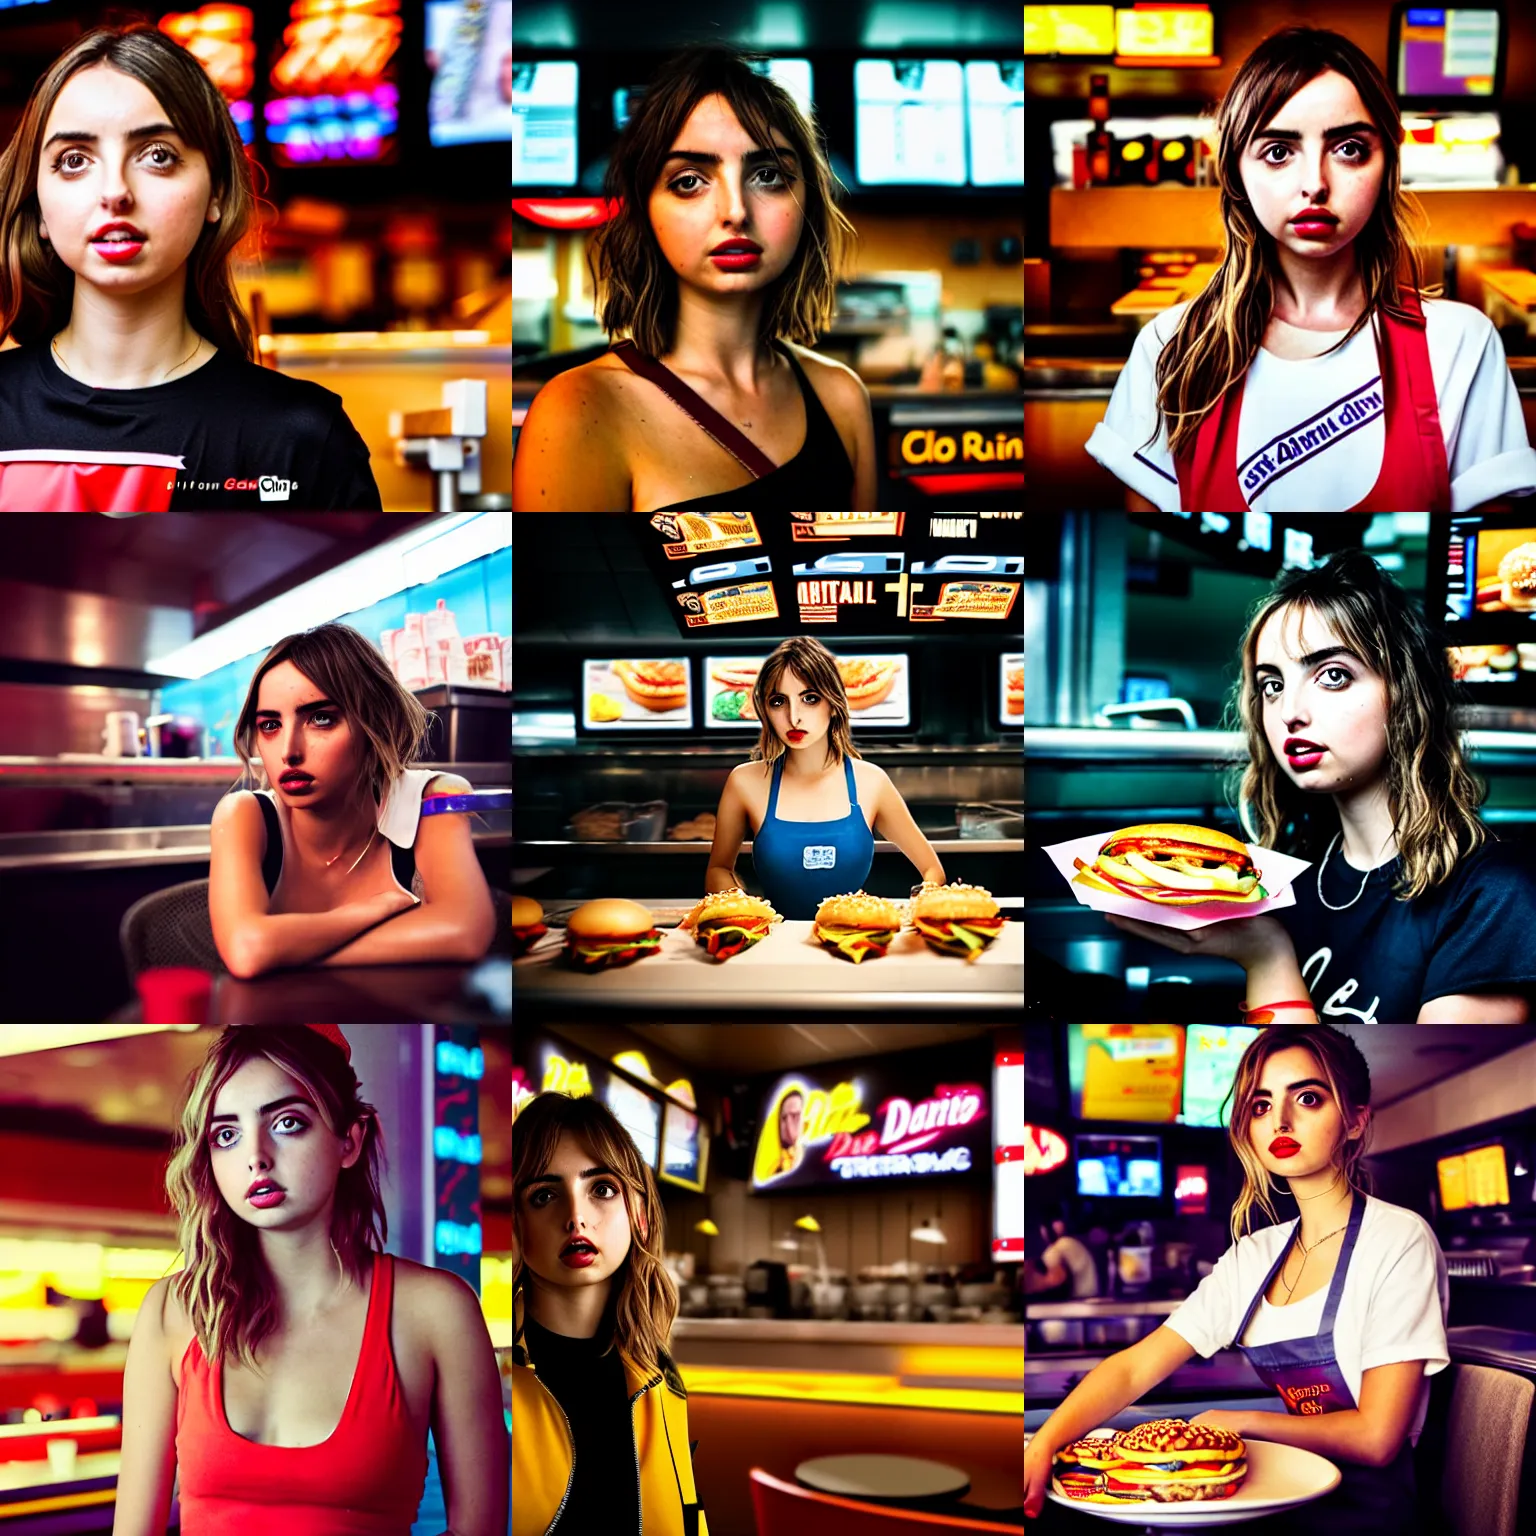 Prompt: ana de armas portrait working in a fast food restaurant, cinematic, cyberpunk style, 3 5 mm